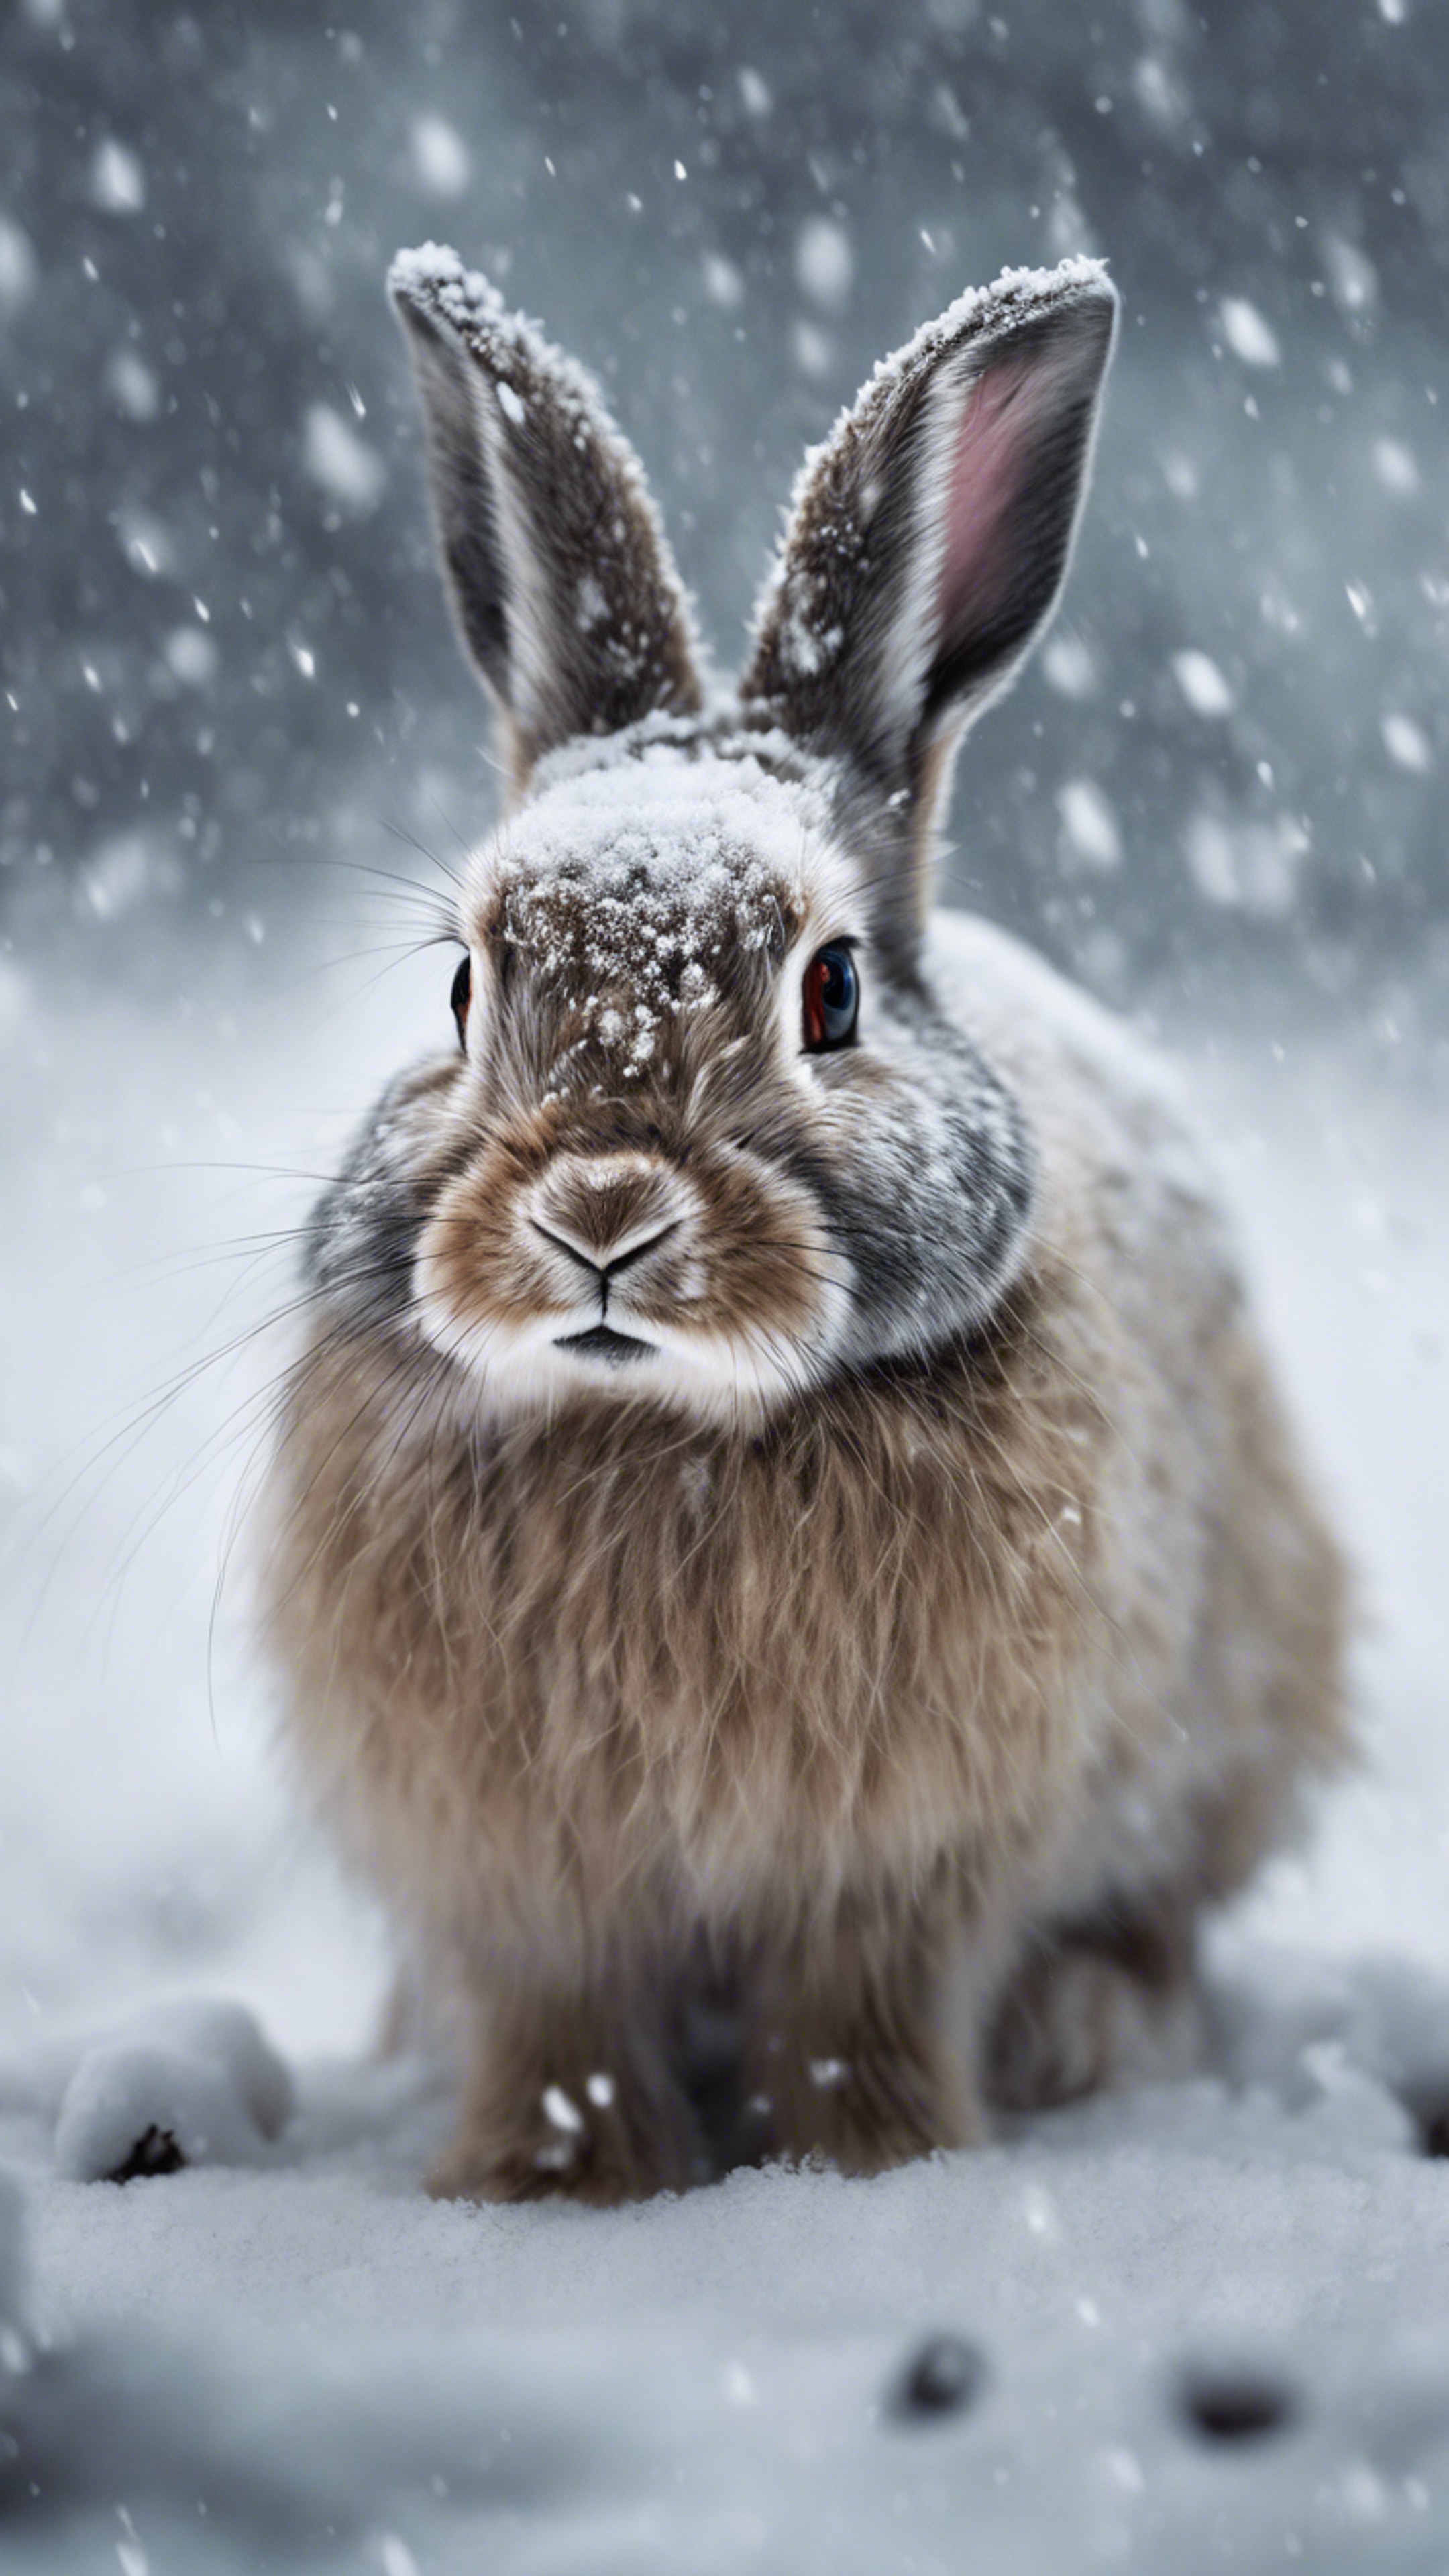 An Arctic rabbit braving a blizzard, its fur blending in with the snow. Tapéta[f8597e39ec4d4470ac43]